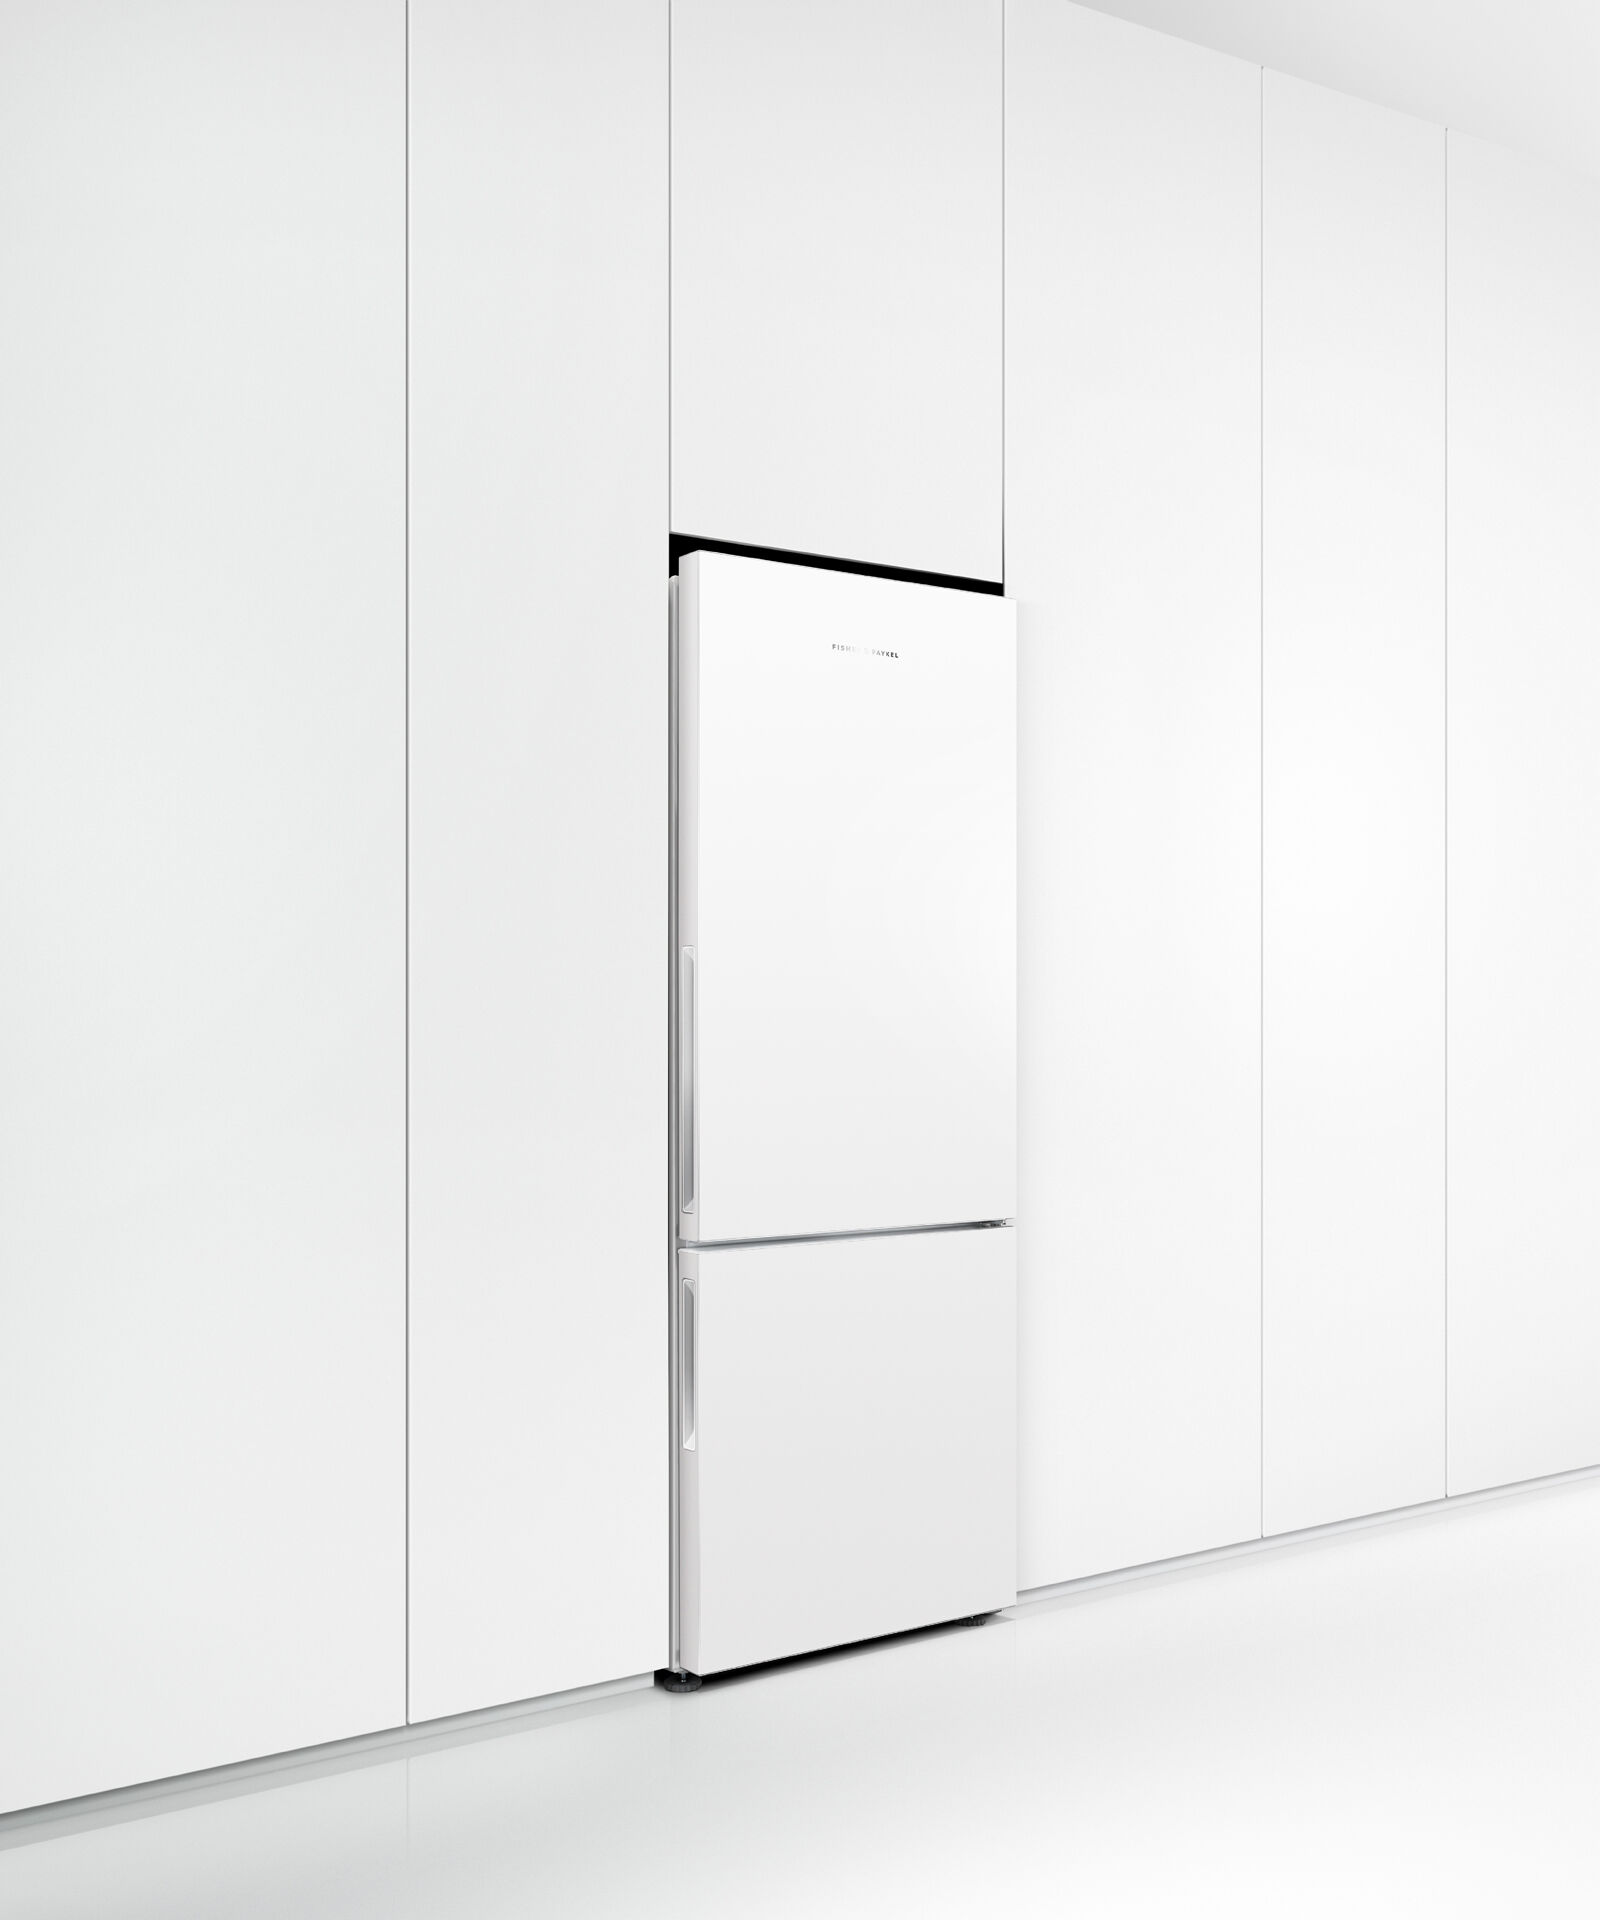 獨立式雪櫃冷凍櫃, 63.5cm gallery image 5.0